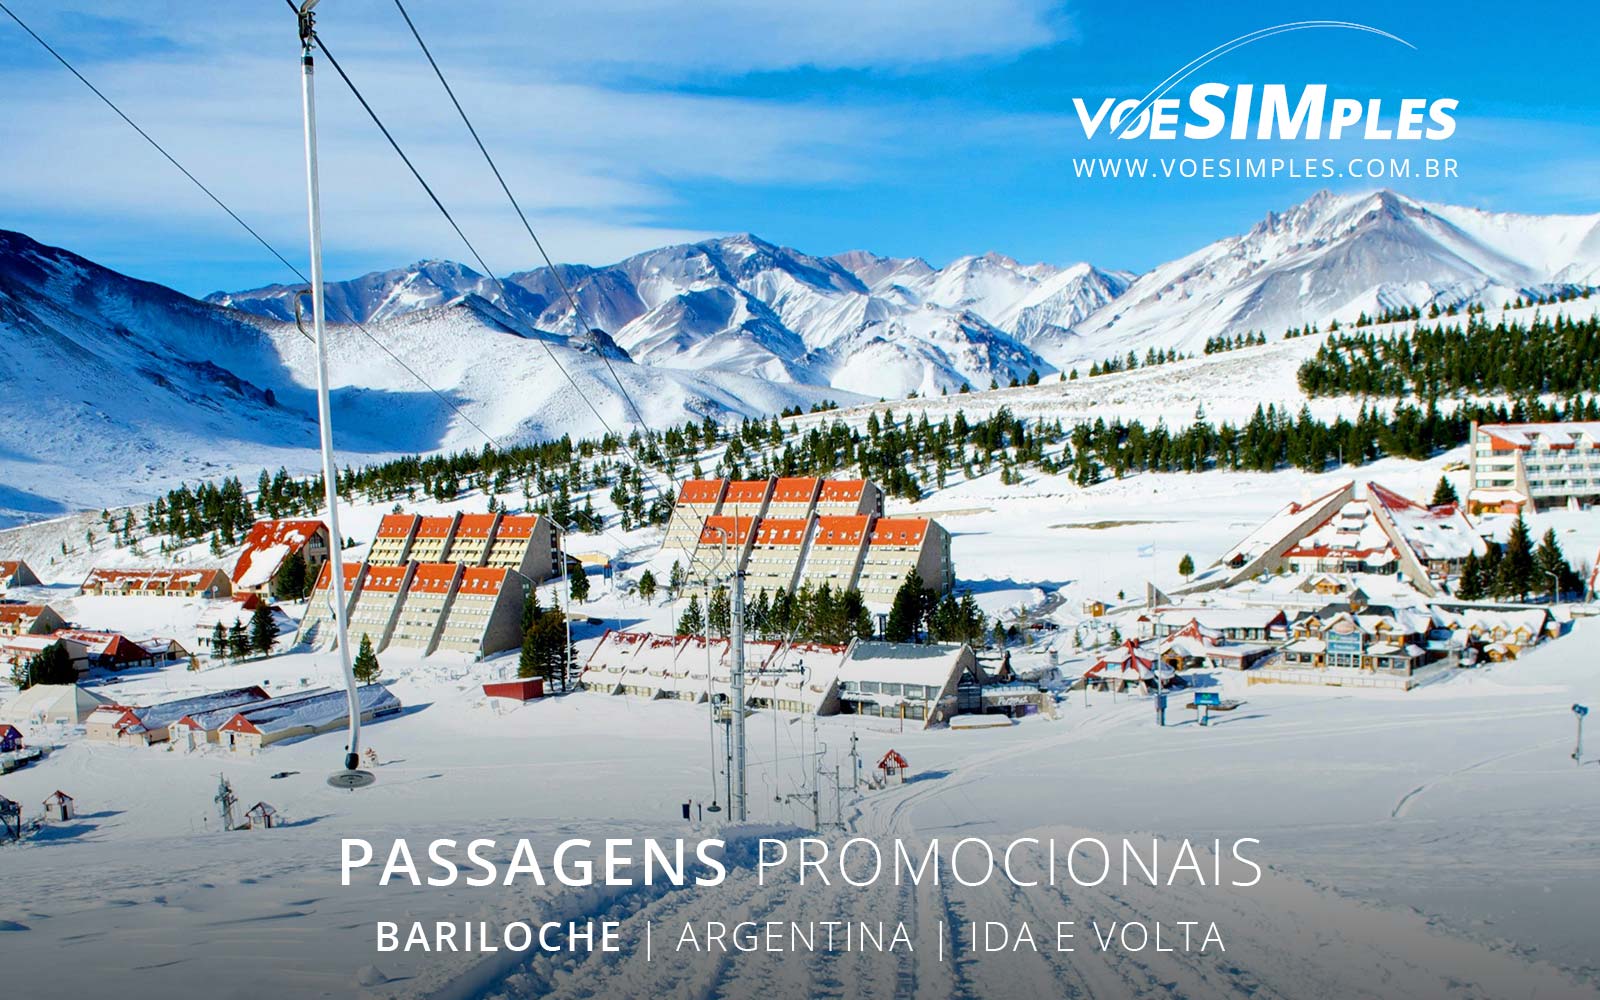 passagens-aereas-baratas-bariloche-argentina-temporada-de-neve-voe-simples-passages-aereas-promocionais-argentina-passagens-promo-bariloche